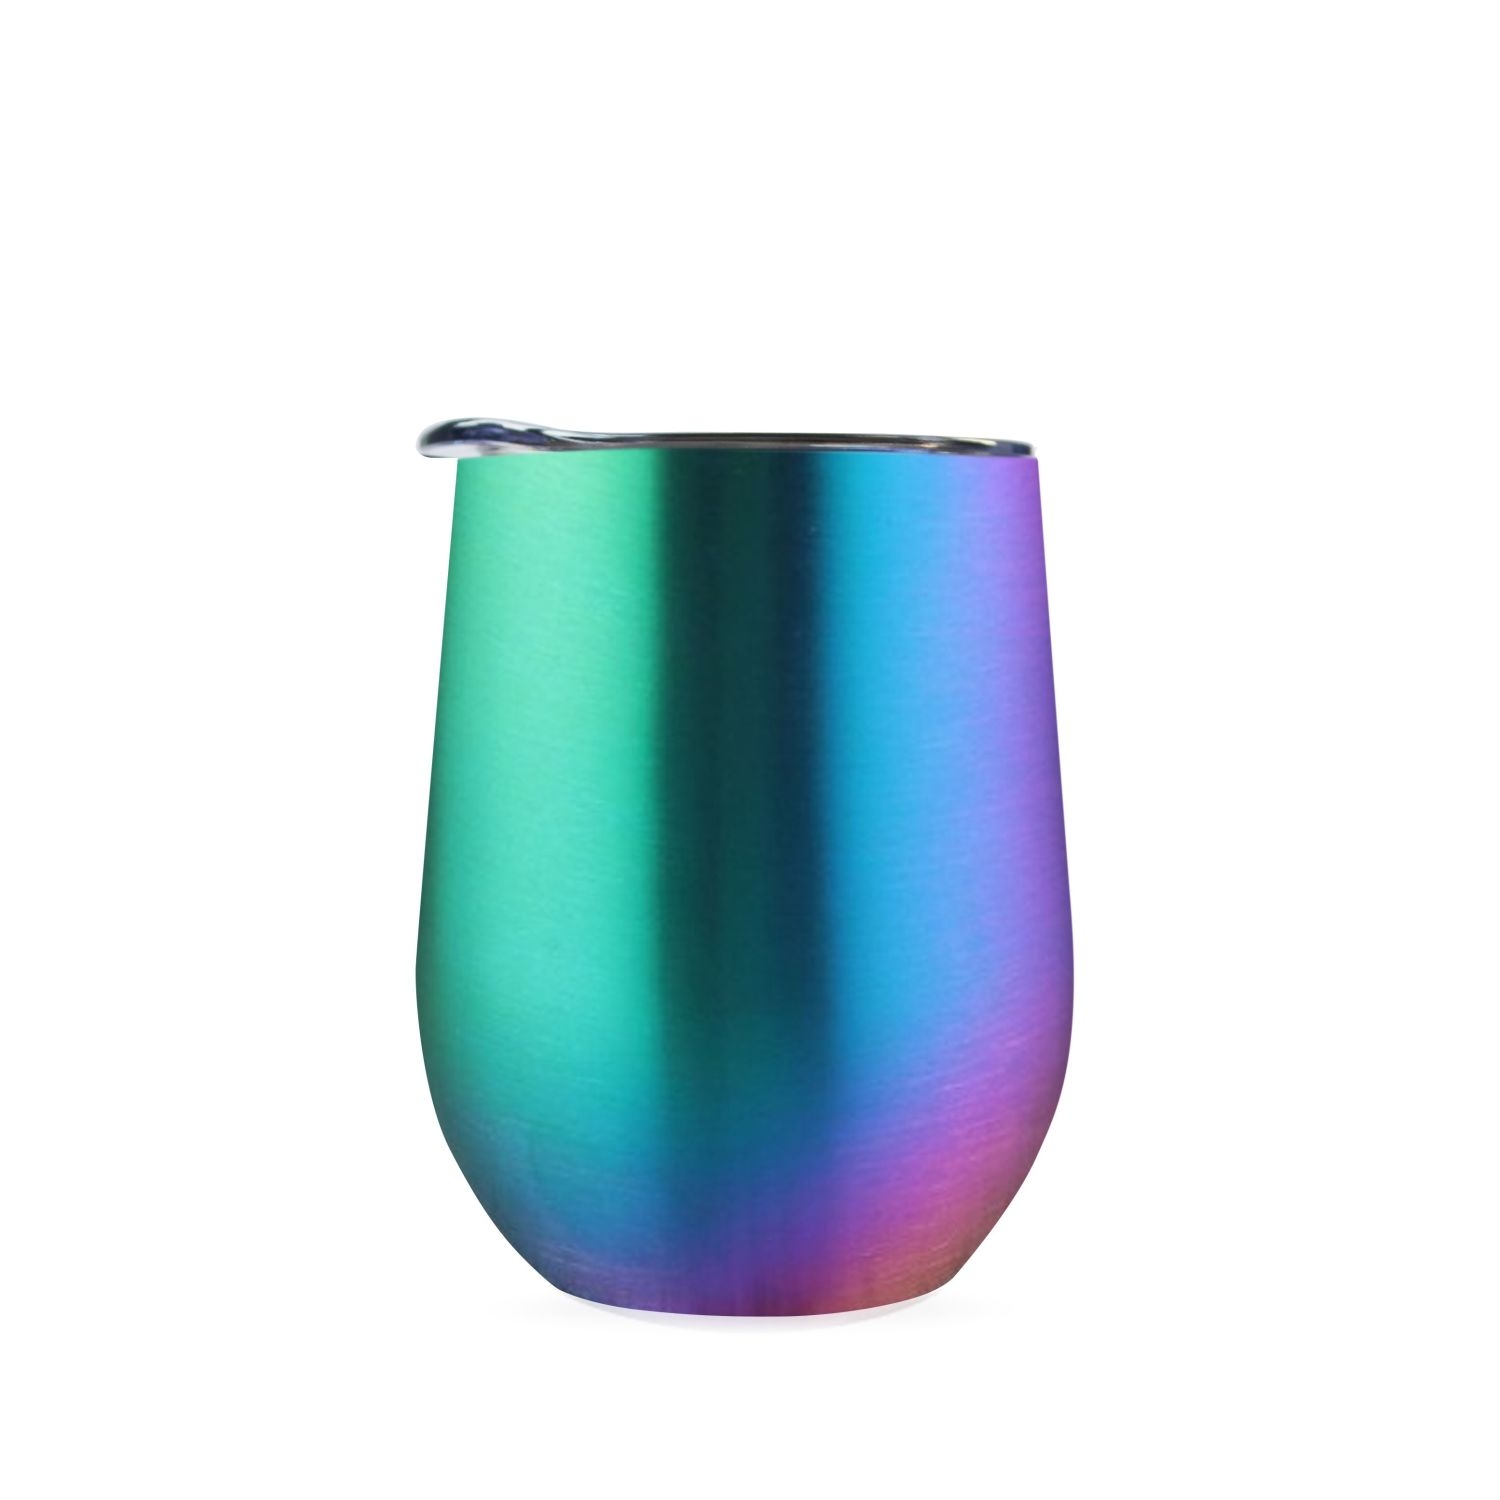 Набор Cofer Tube galvanic CO12 x black (спектр), спектр, металл